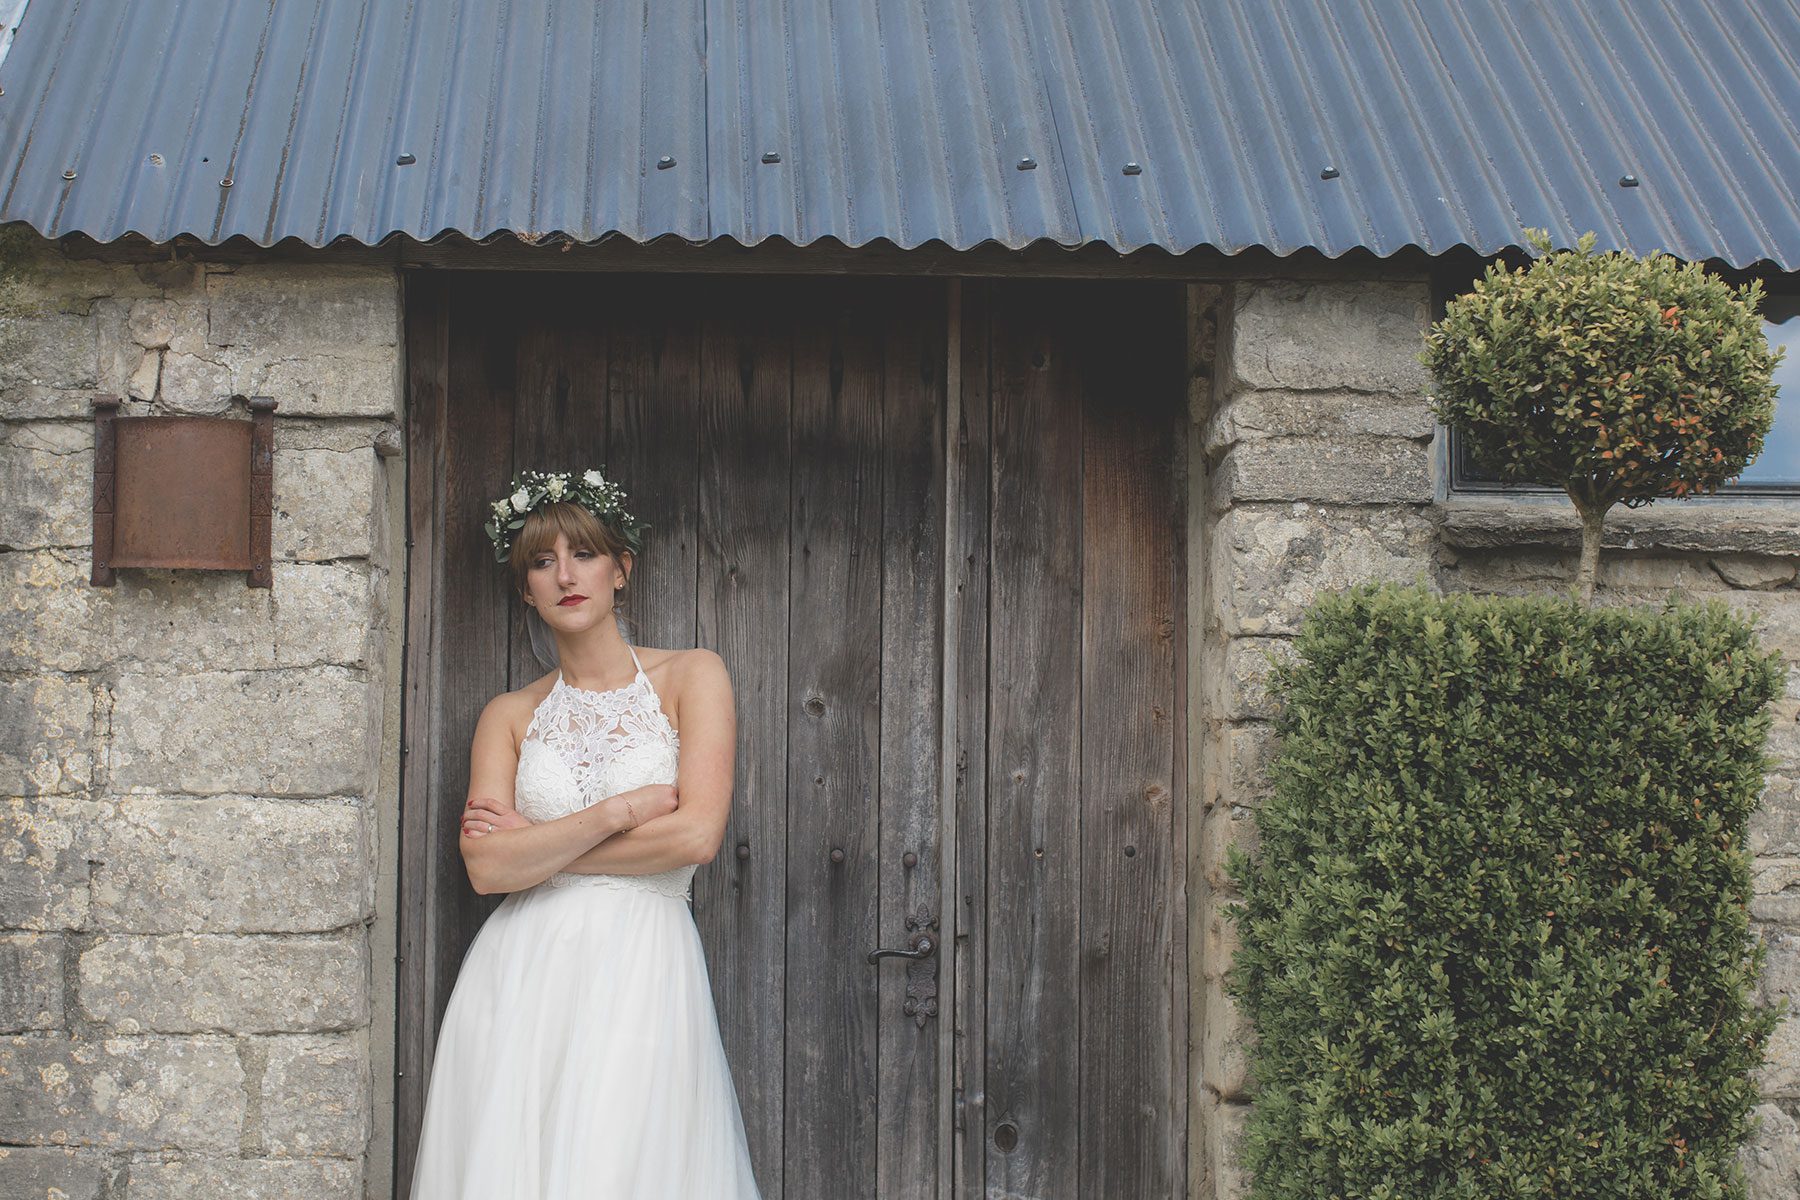 Cripps Barn - Reportage Wedding Photography in Cheltenham | Bullit Photography